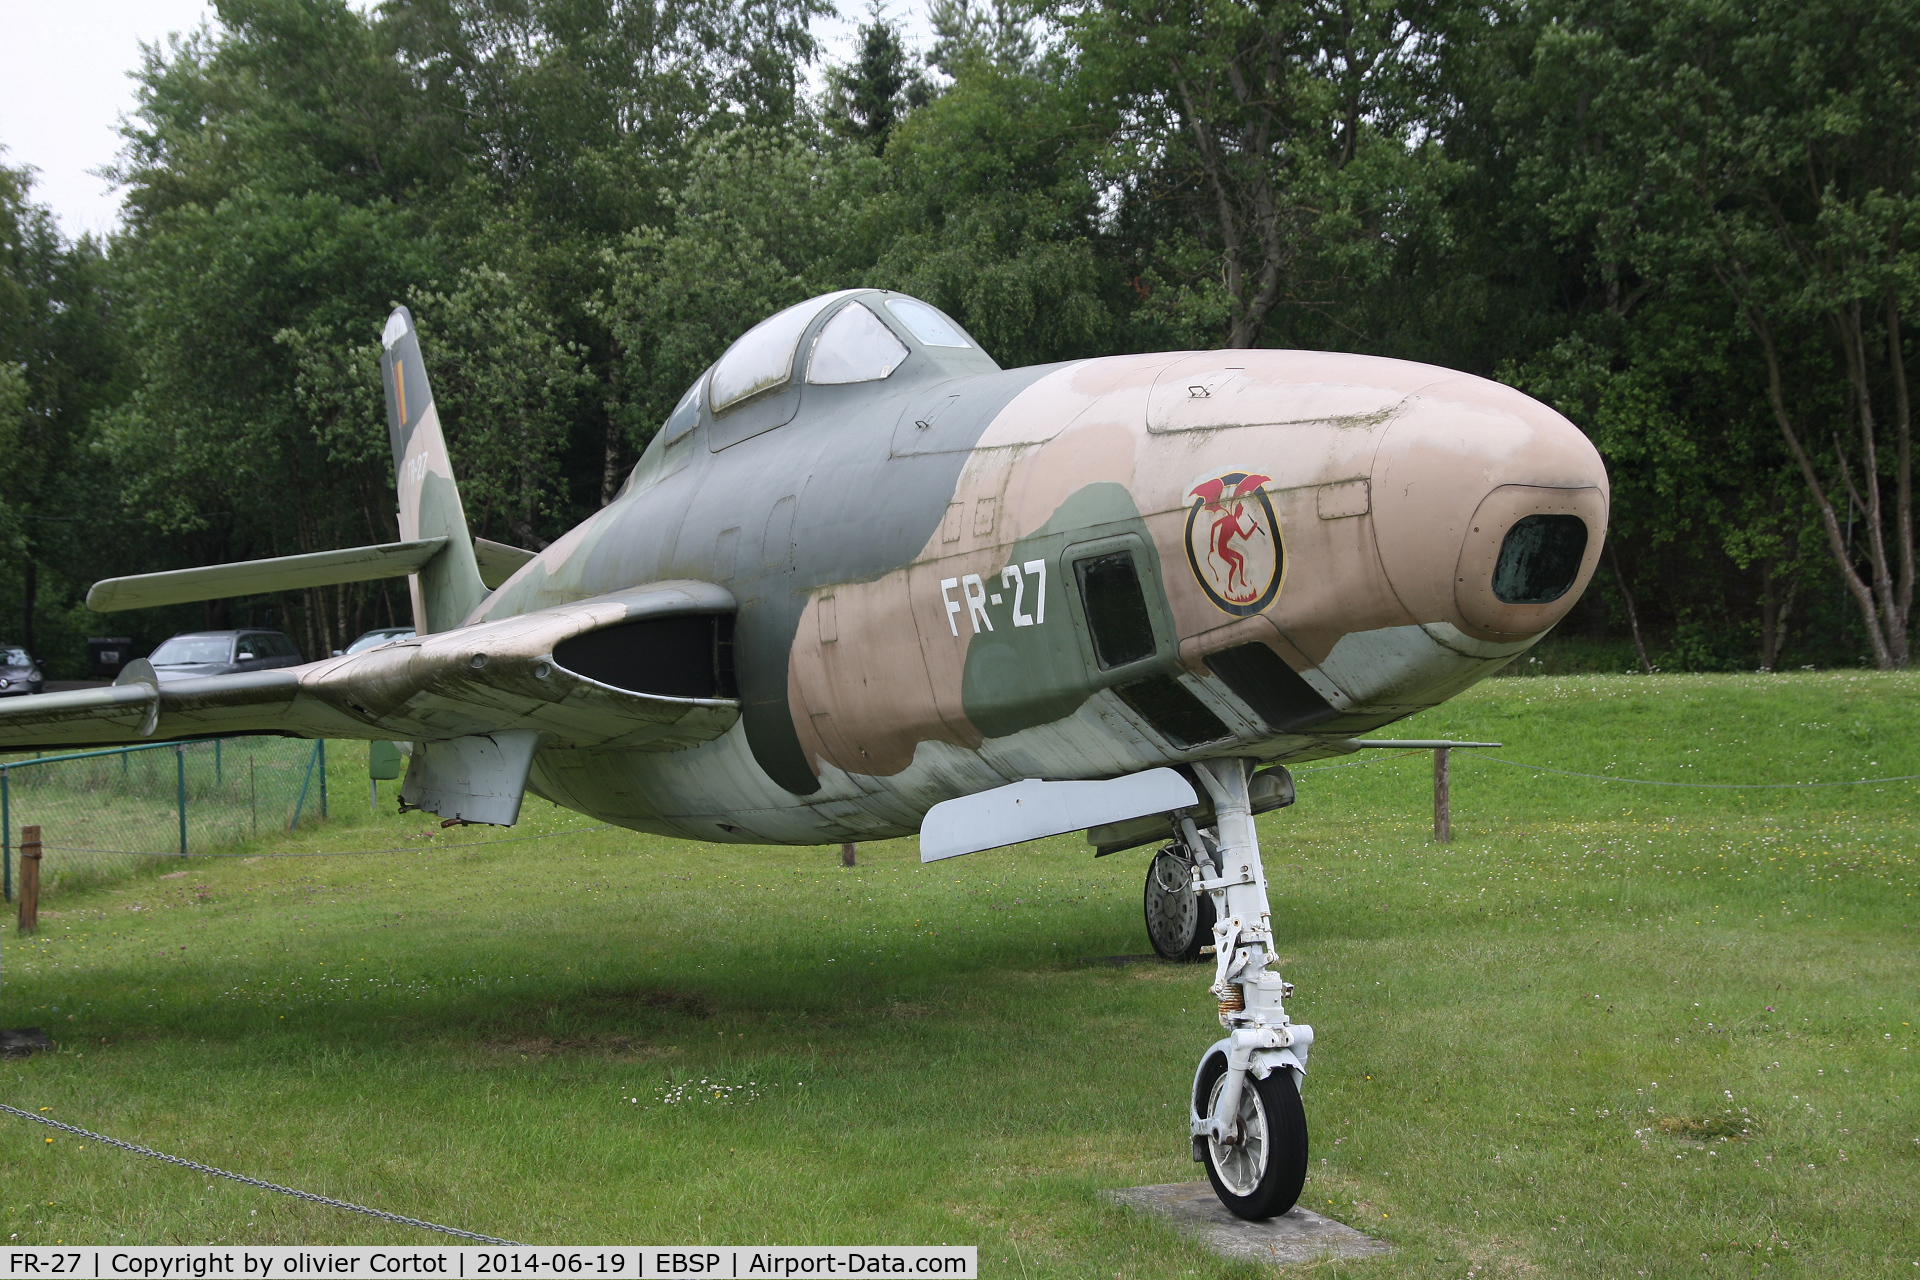 FR-27, 1955 Republic RF-84F Thunderflash C/N Not found (51-1922), now a guate guardian